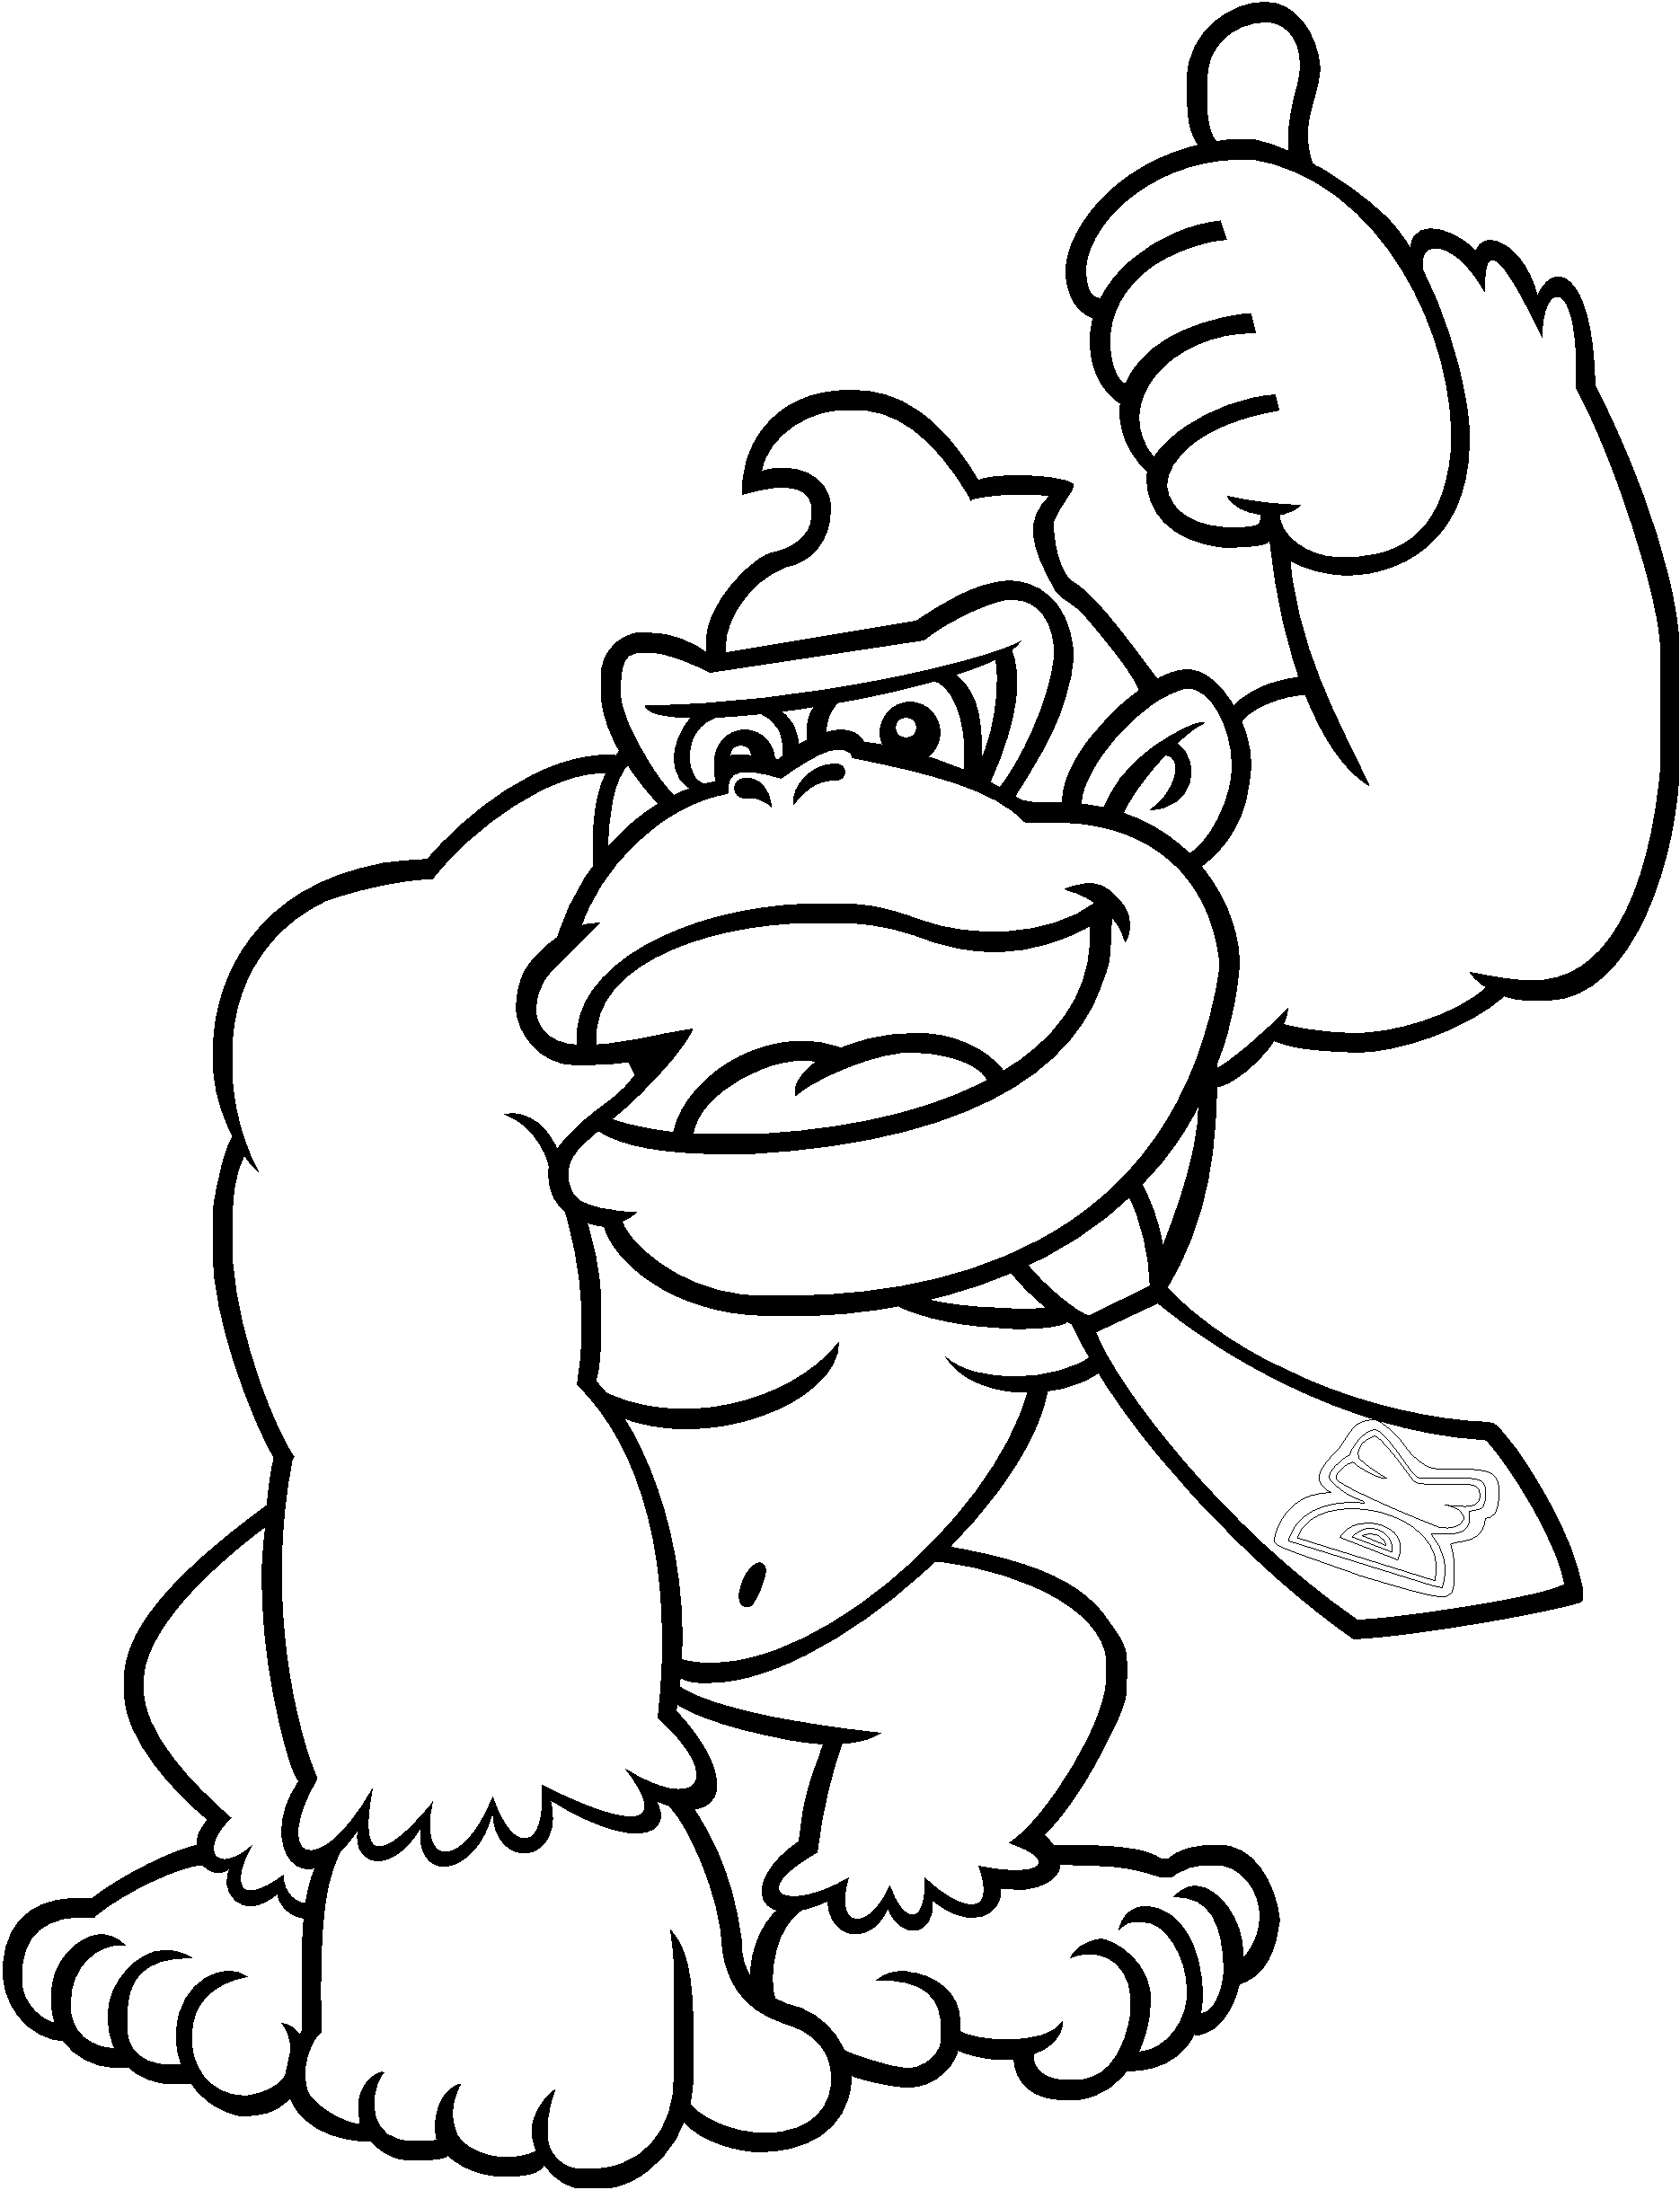 Donkey Kong duim omhoog kleurplaat